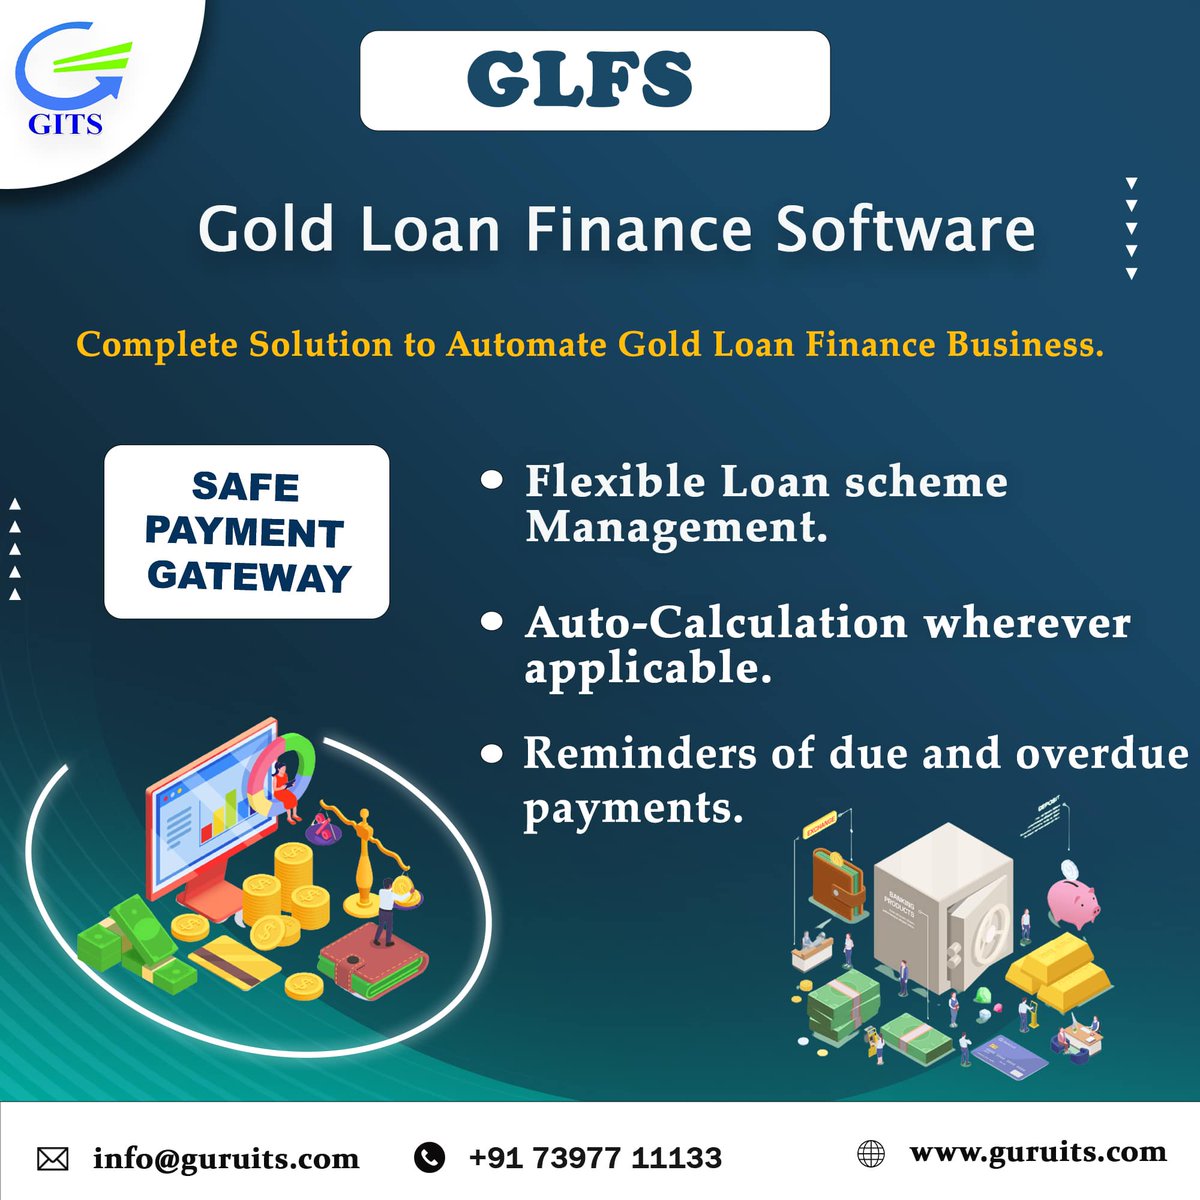 𝐆𝐨𝐥𝐝 𝐋𝐨𝐚𝐧 𝐅𝐢𝐧𝐚𝐧𝐜𝐞 𝐒𝐲𝐬𝐭𝐞𝐦 (𝐆𝐋𝐅𝐒)
Visit Us: guruits.com
Contact Us:+91 73977 11133
Email: info@guruits.com
#GLFS #safepaymentgateway #goldloan #timeframe #reminder #features #safepayments #gateway #managements #goldloan #financesoftware #GITS